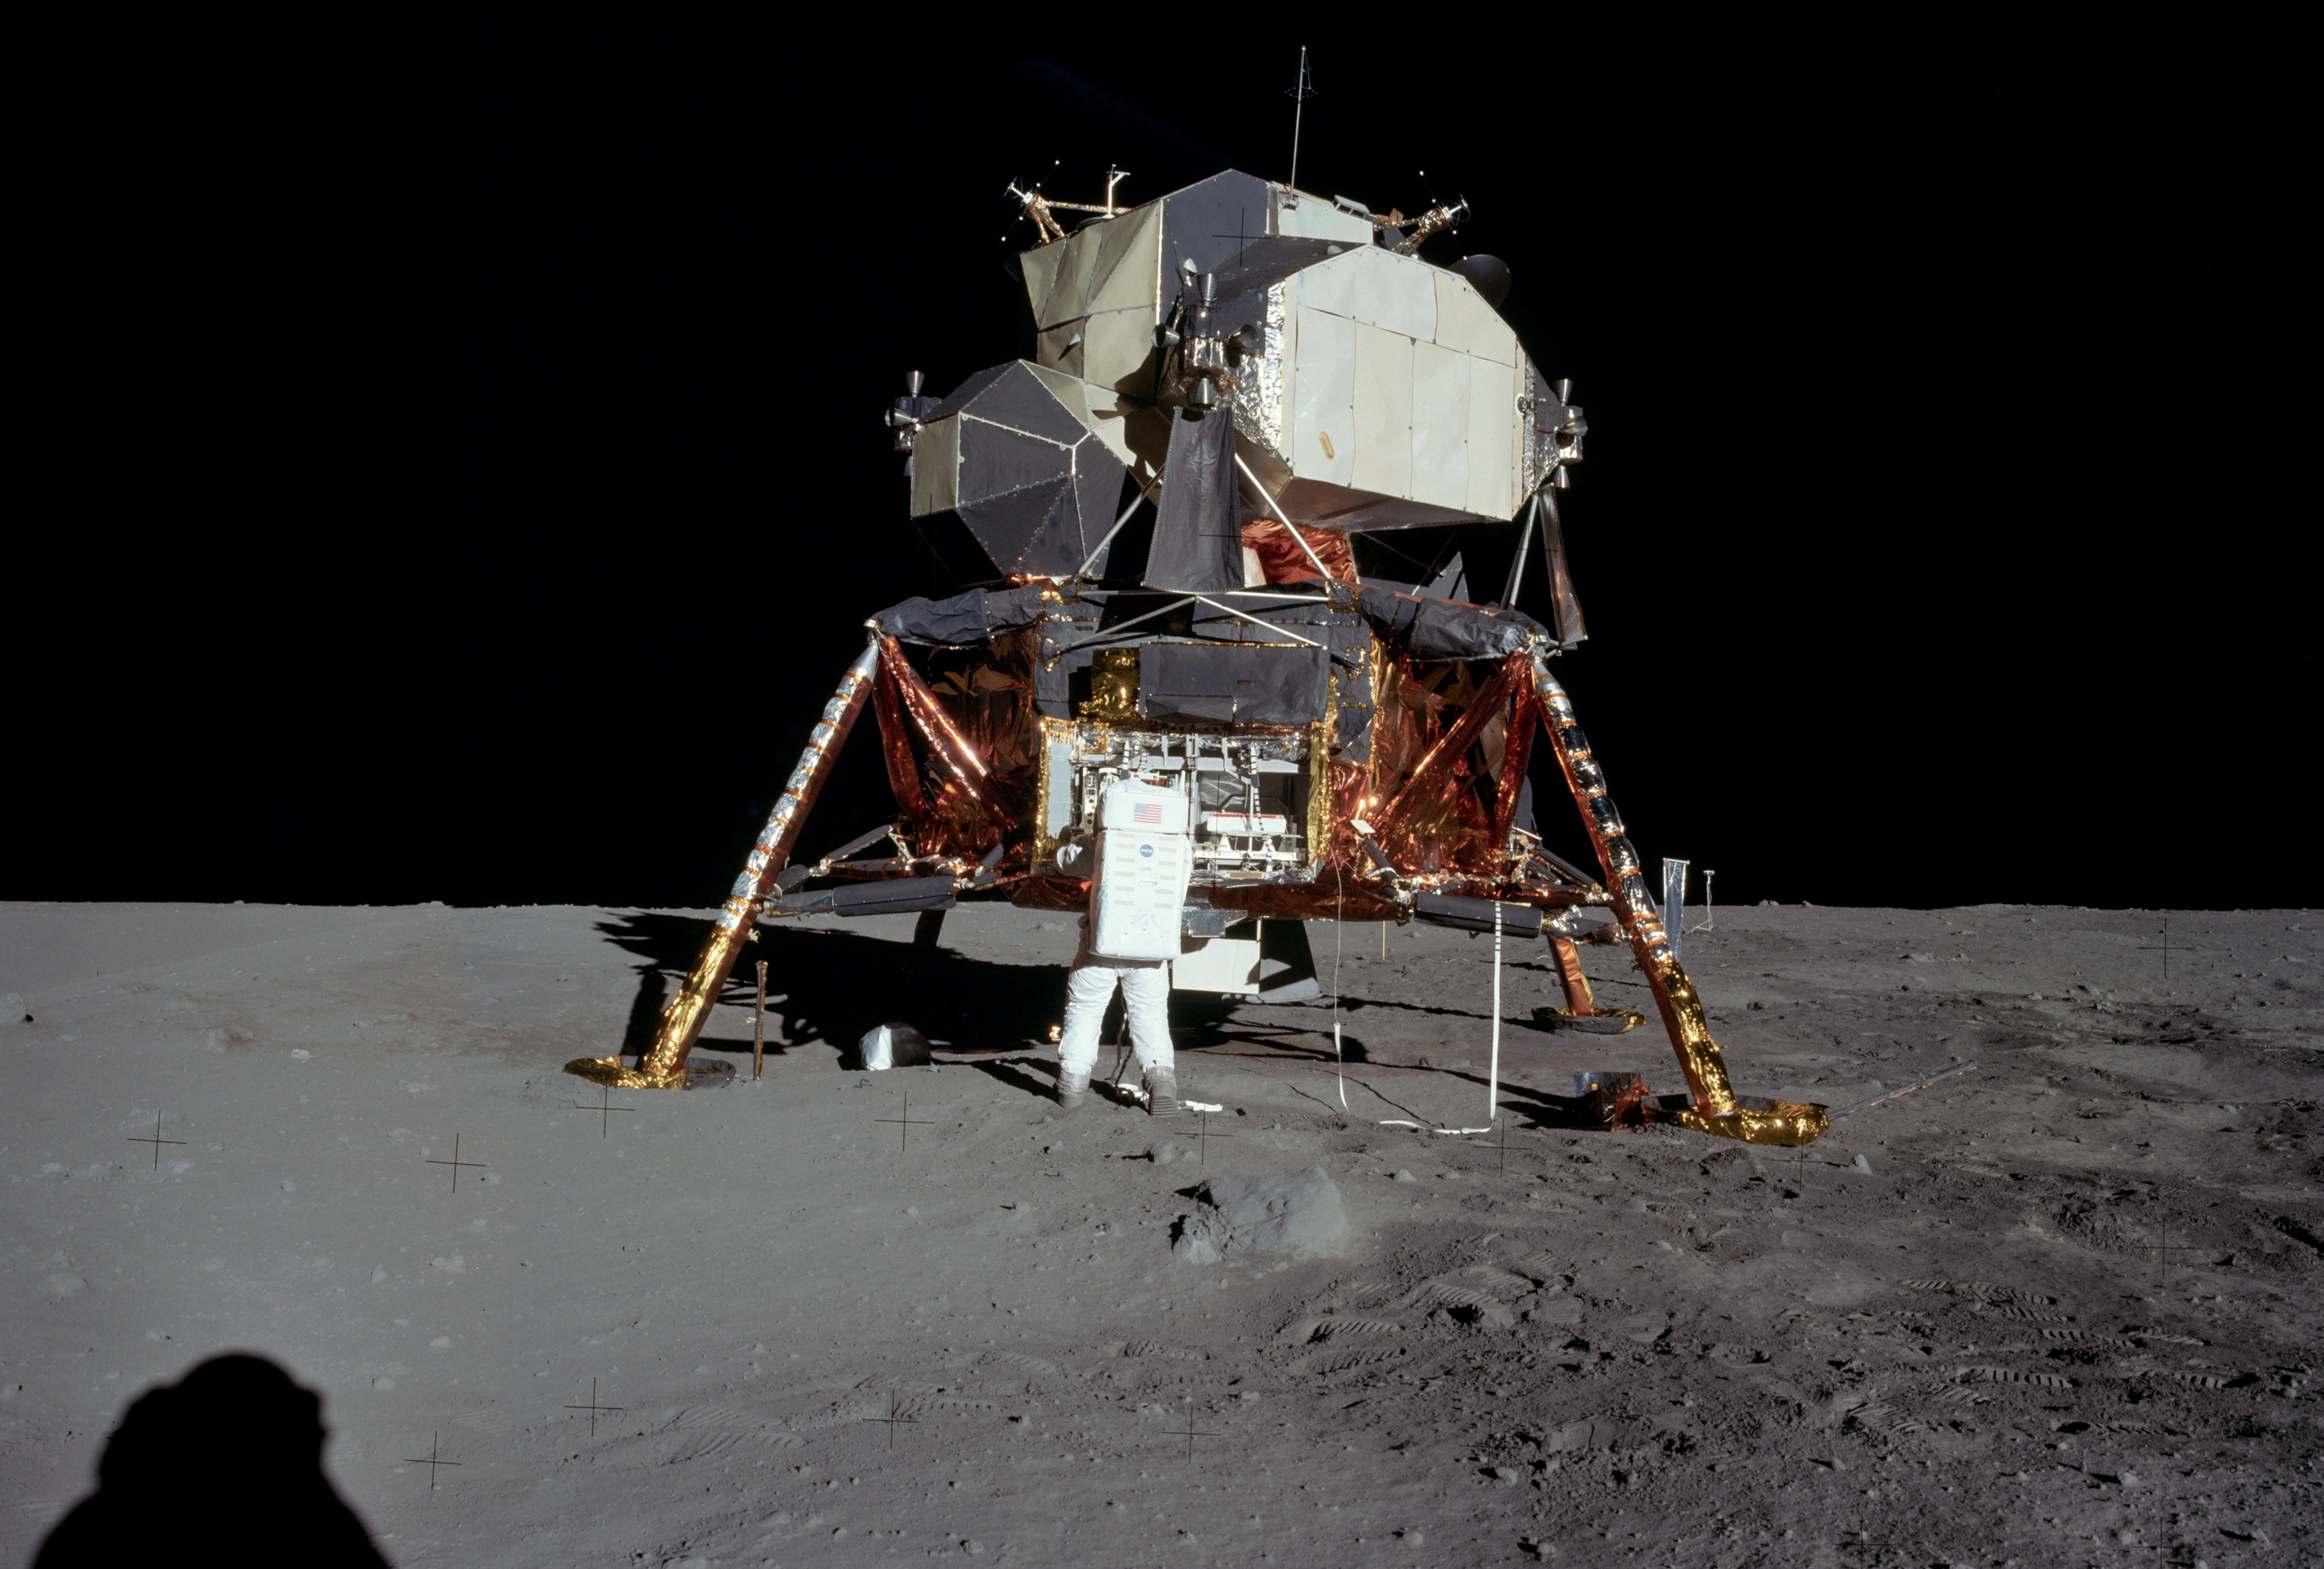 Космический полет на луну. Аполлон 11. Старт Аполлона 11. Apollo 11 Lunar Module. Лунный модуль корабля Аполлон 11 НАСА.